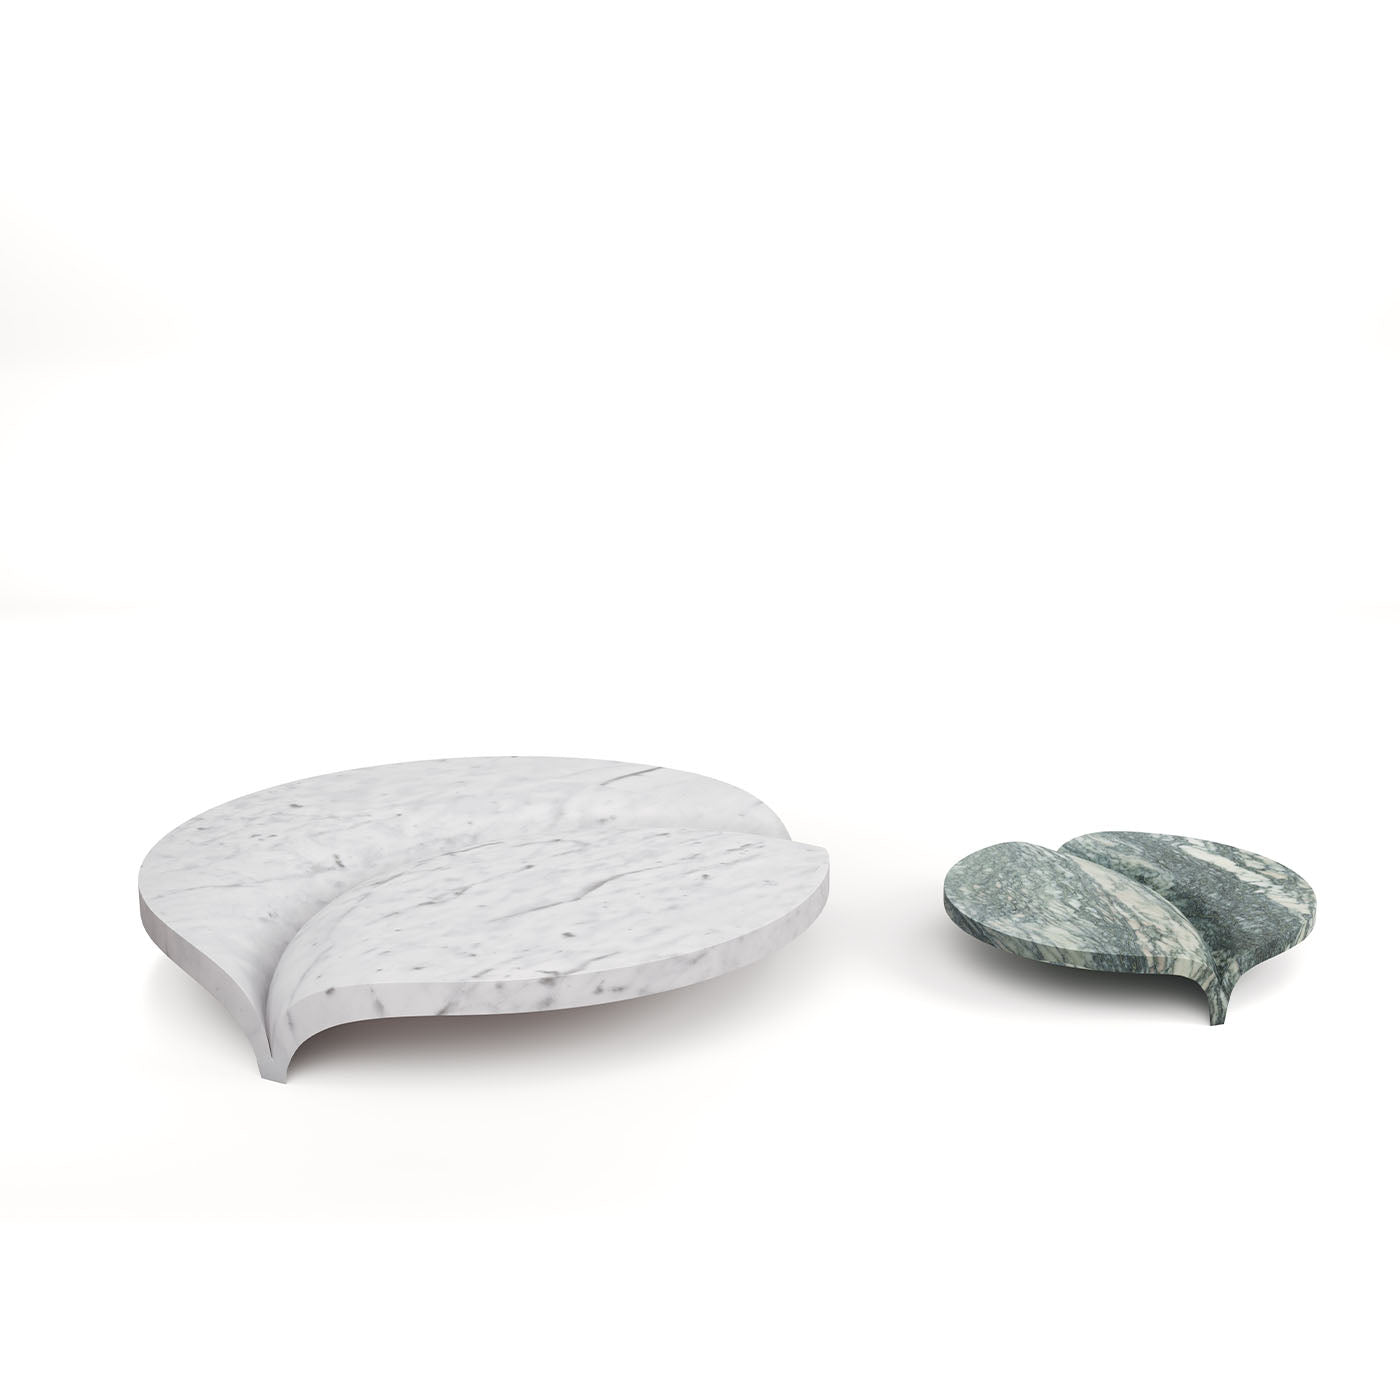 Luna Table in Green Luana and White Carrara Marble - Alternative view 3